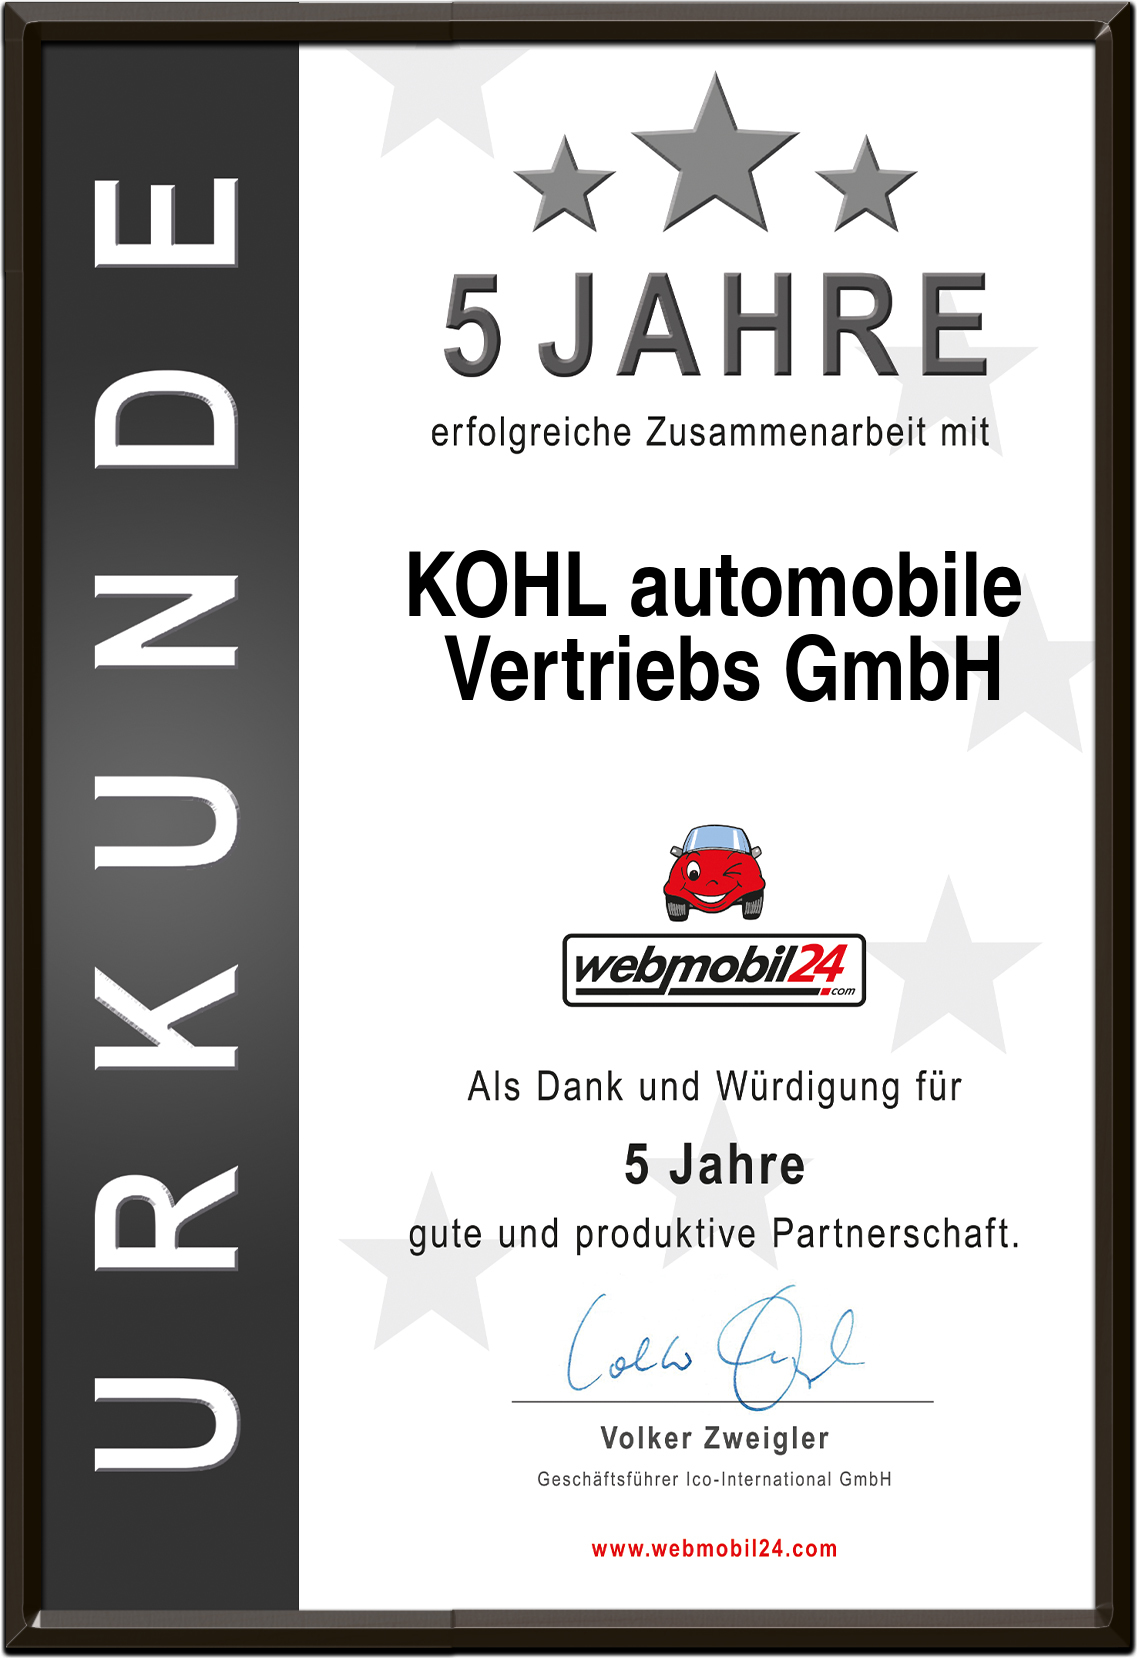 KOHL automobile Vertriebs GmbH